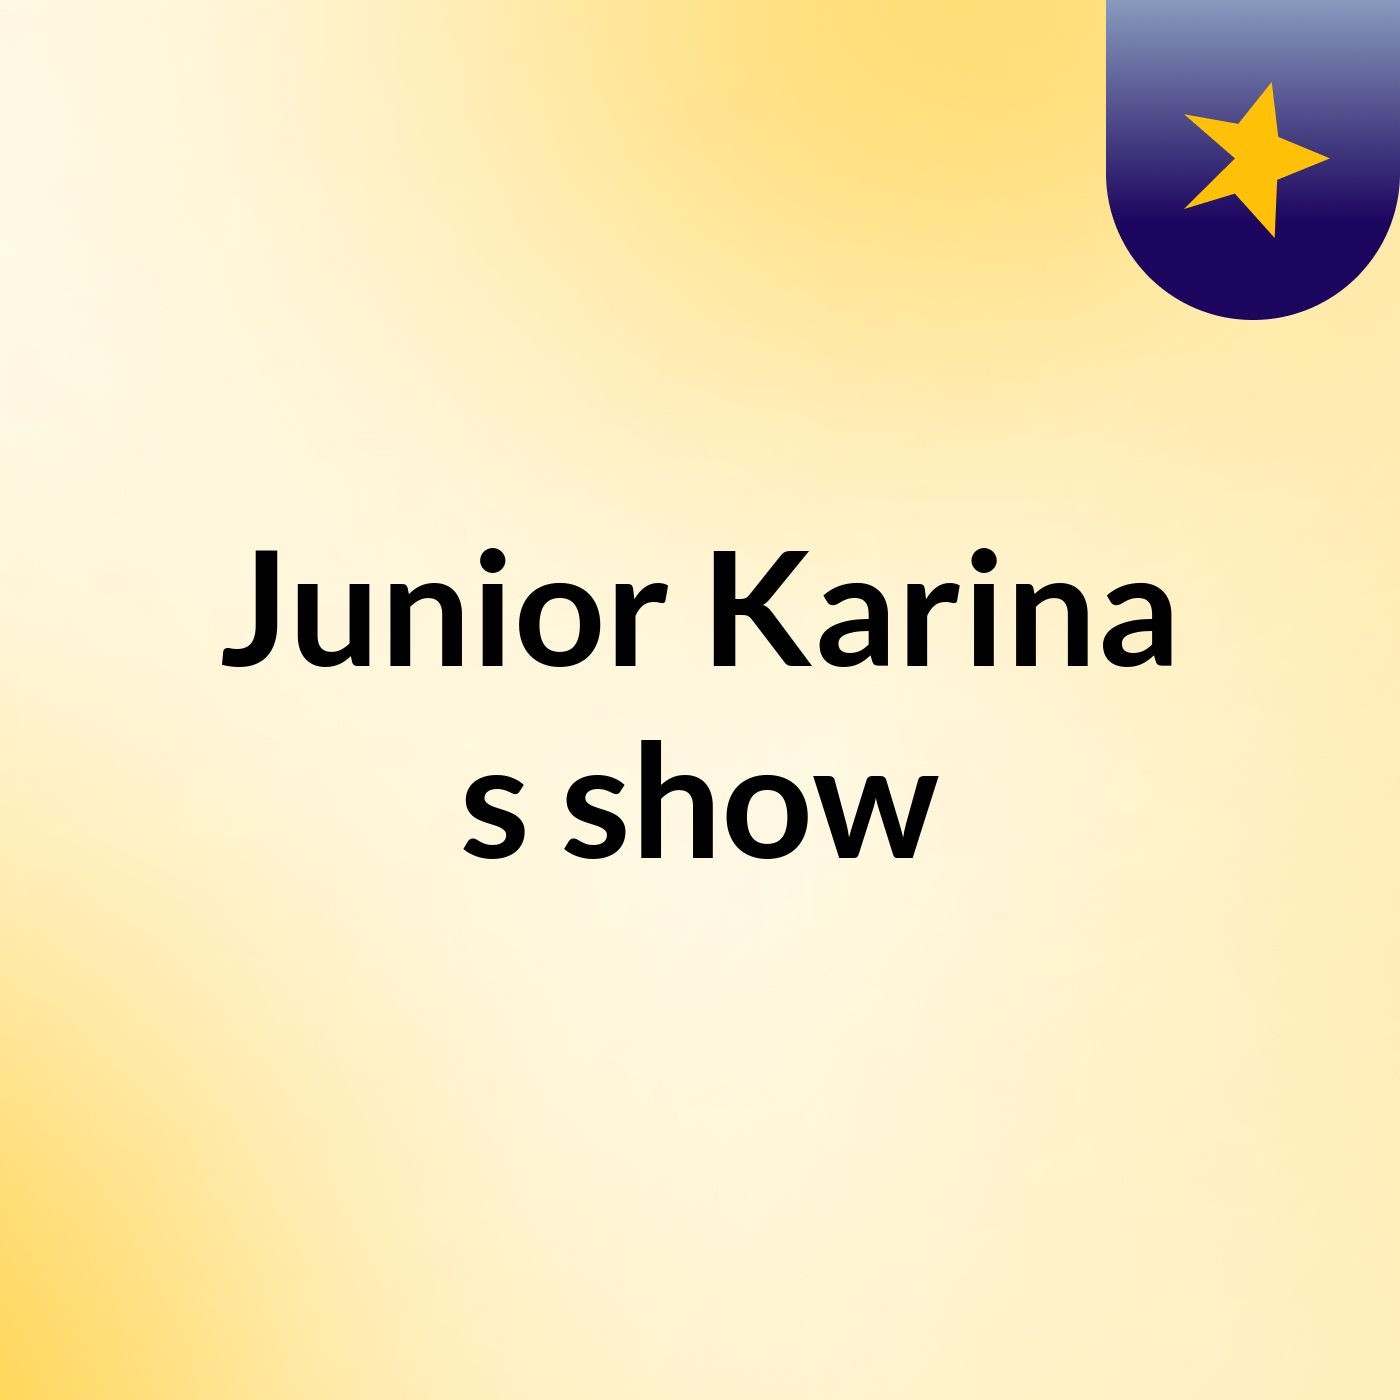 Junior Karina's show